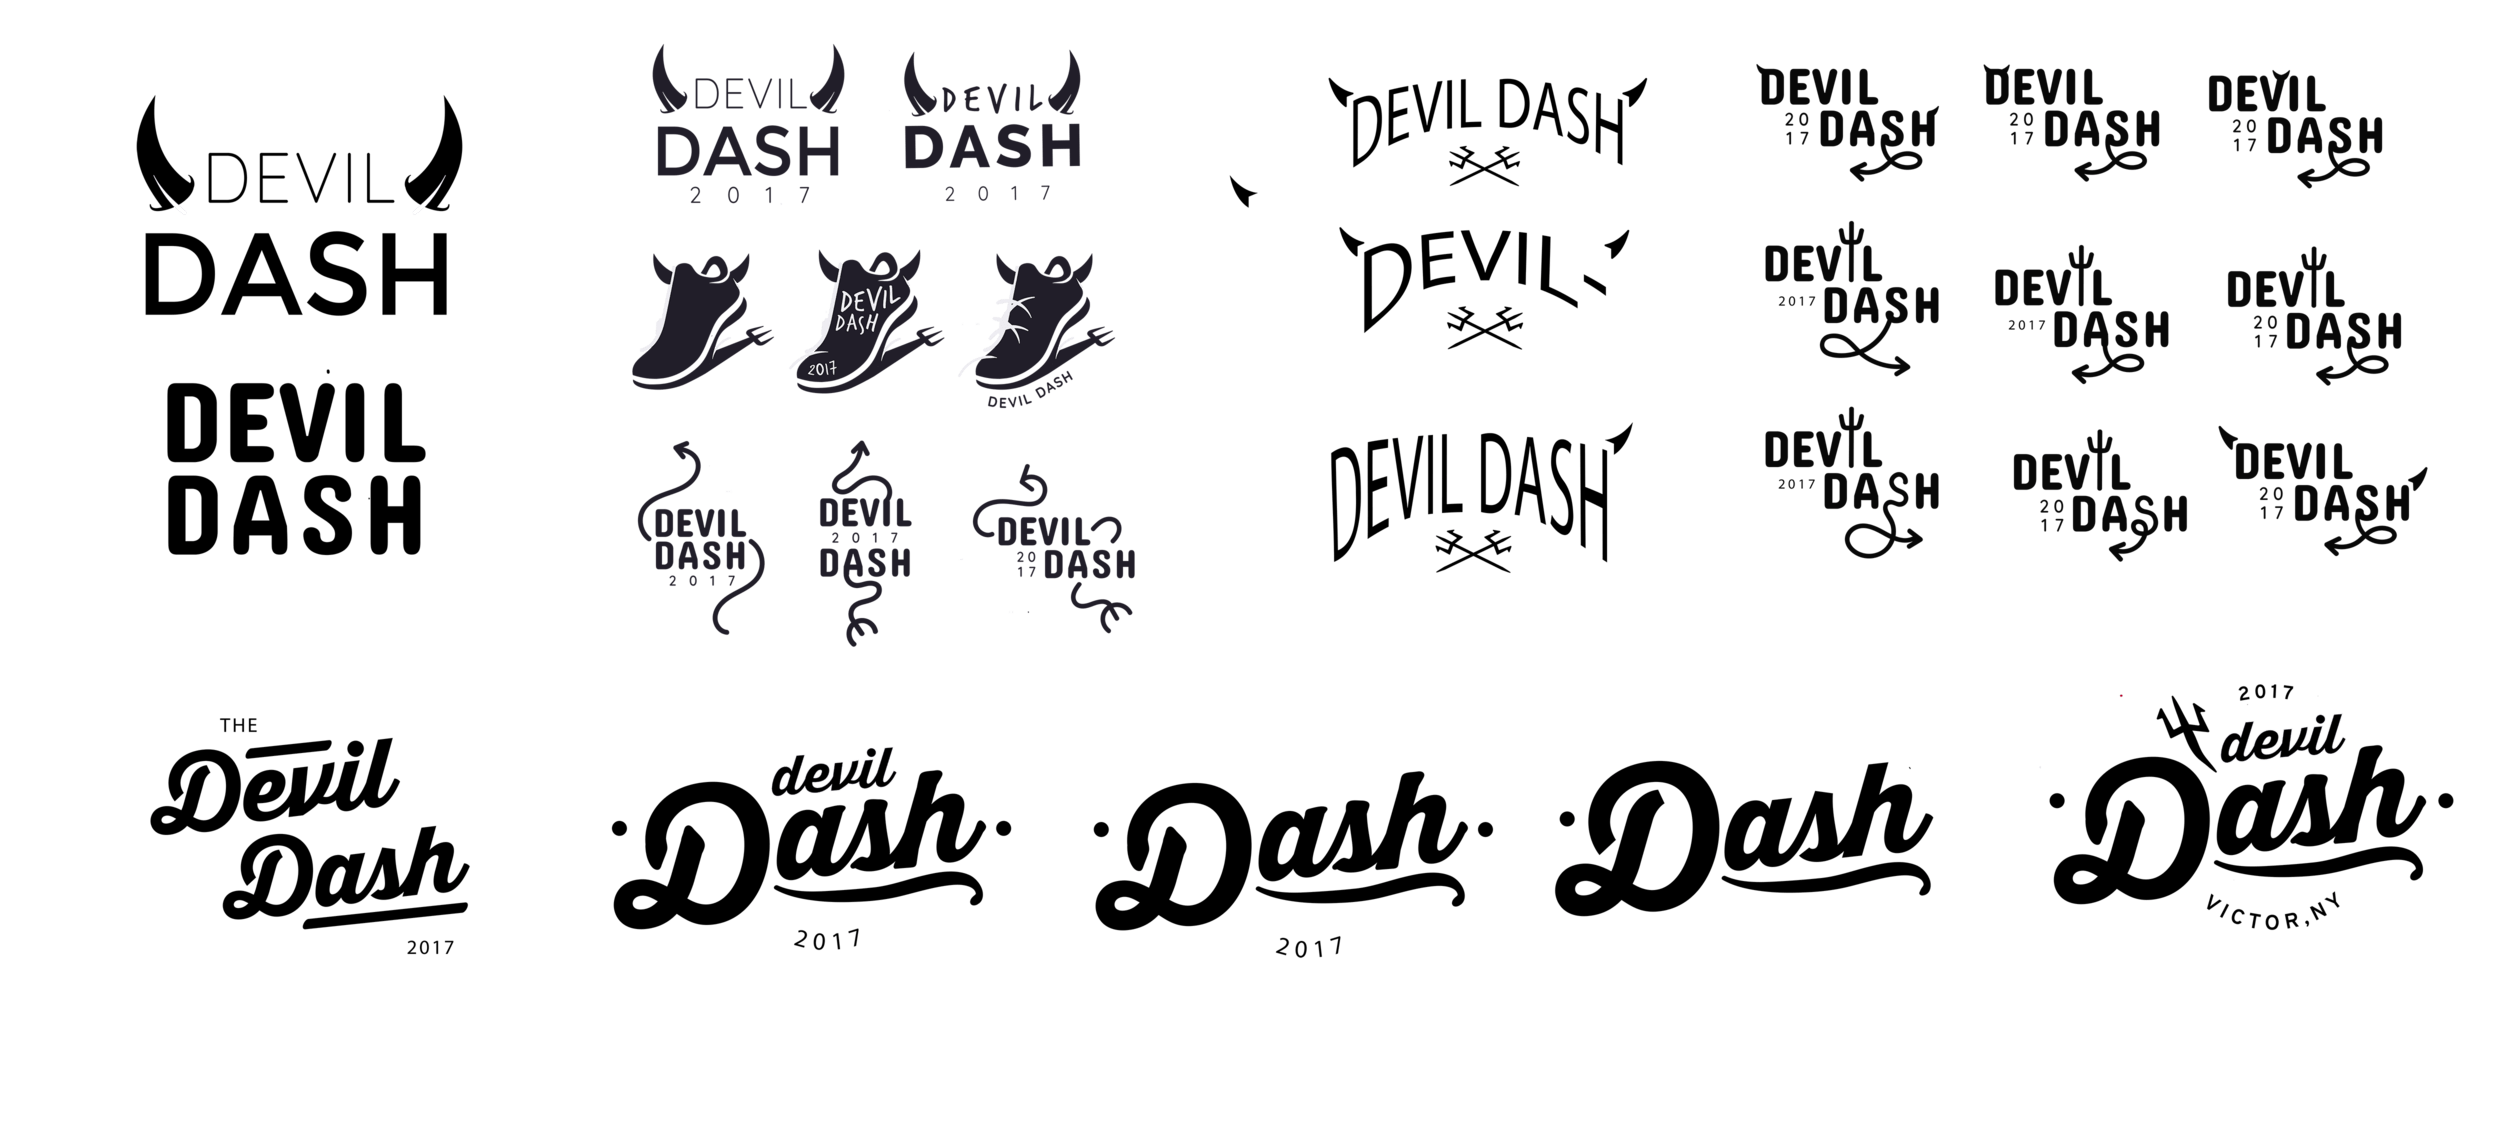 Dash Logo - Devil Dash Logo